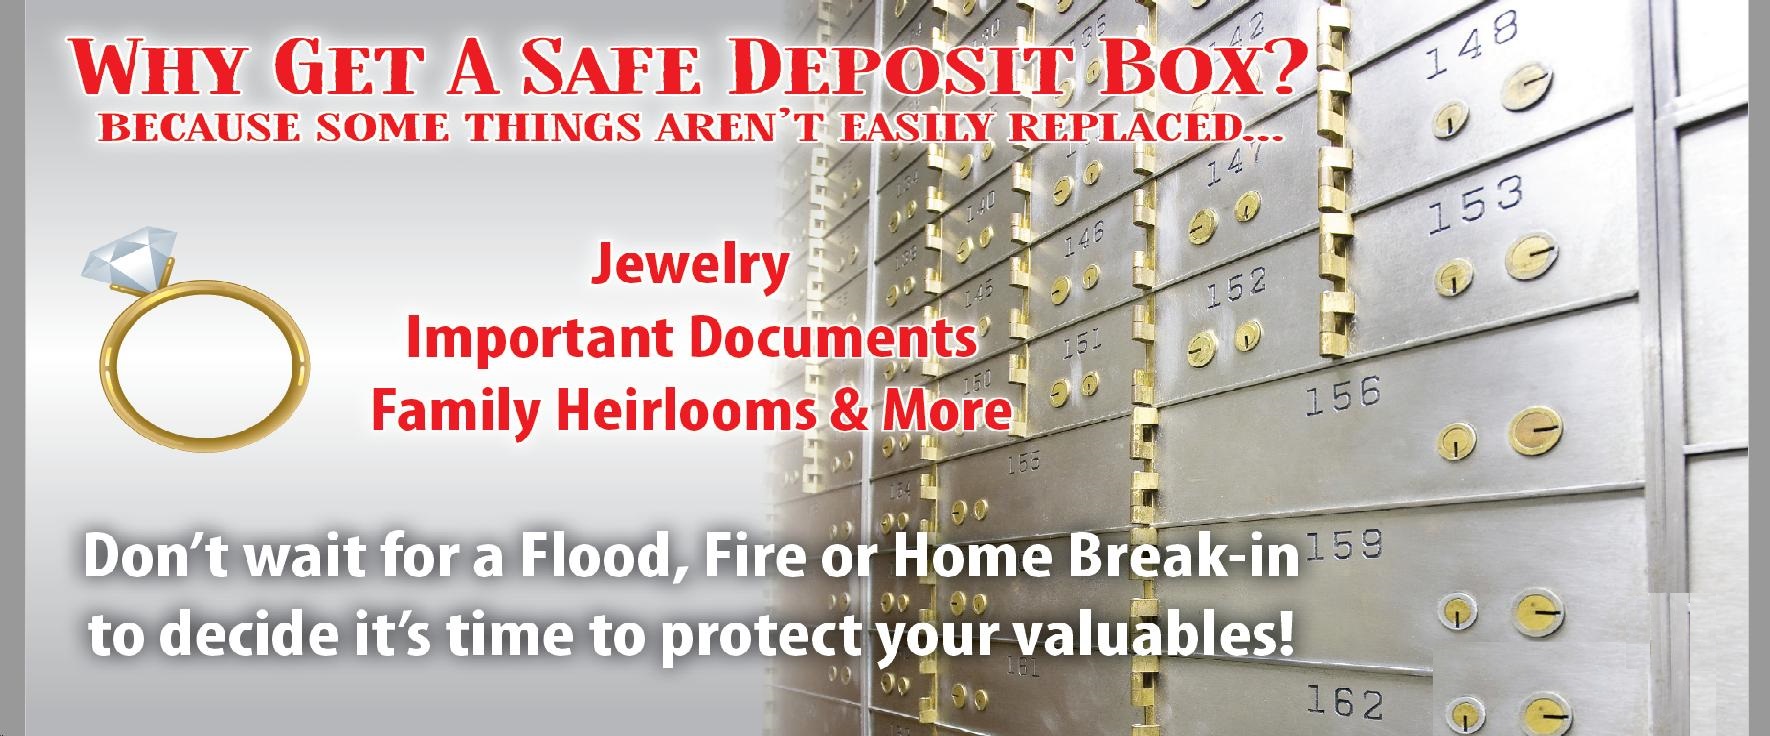 Why get a Safe Deposit Box?